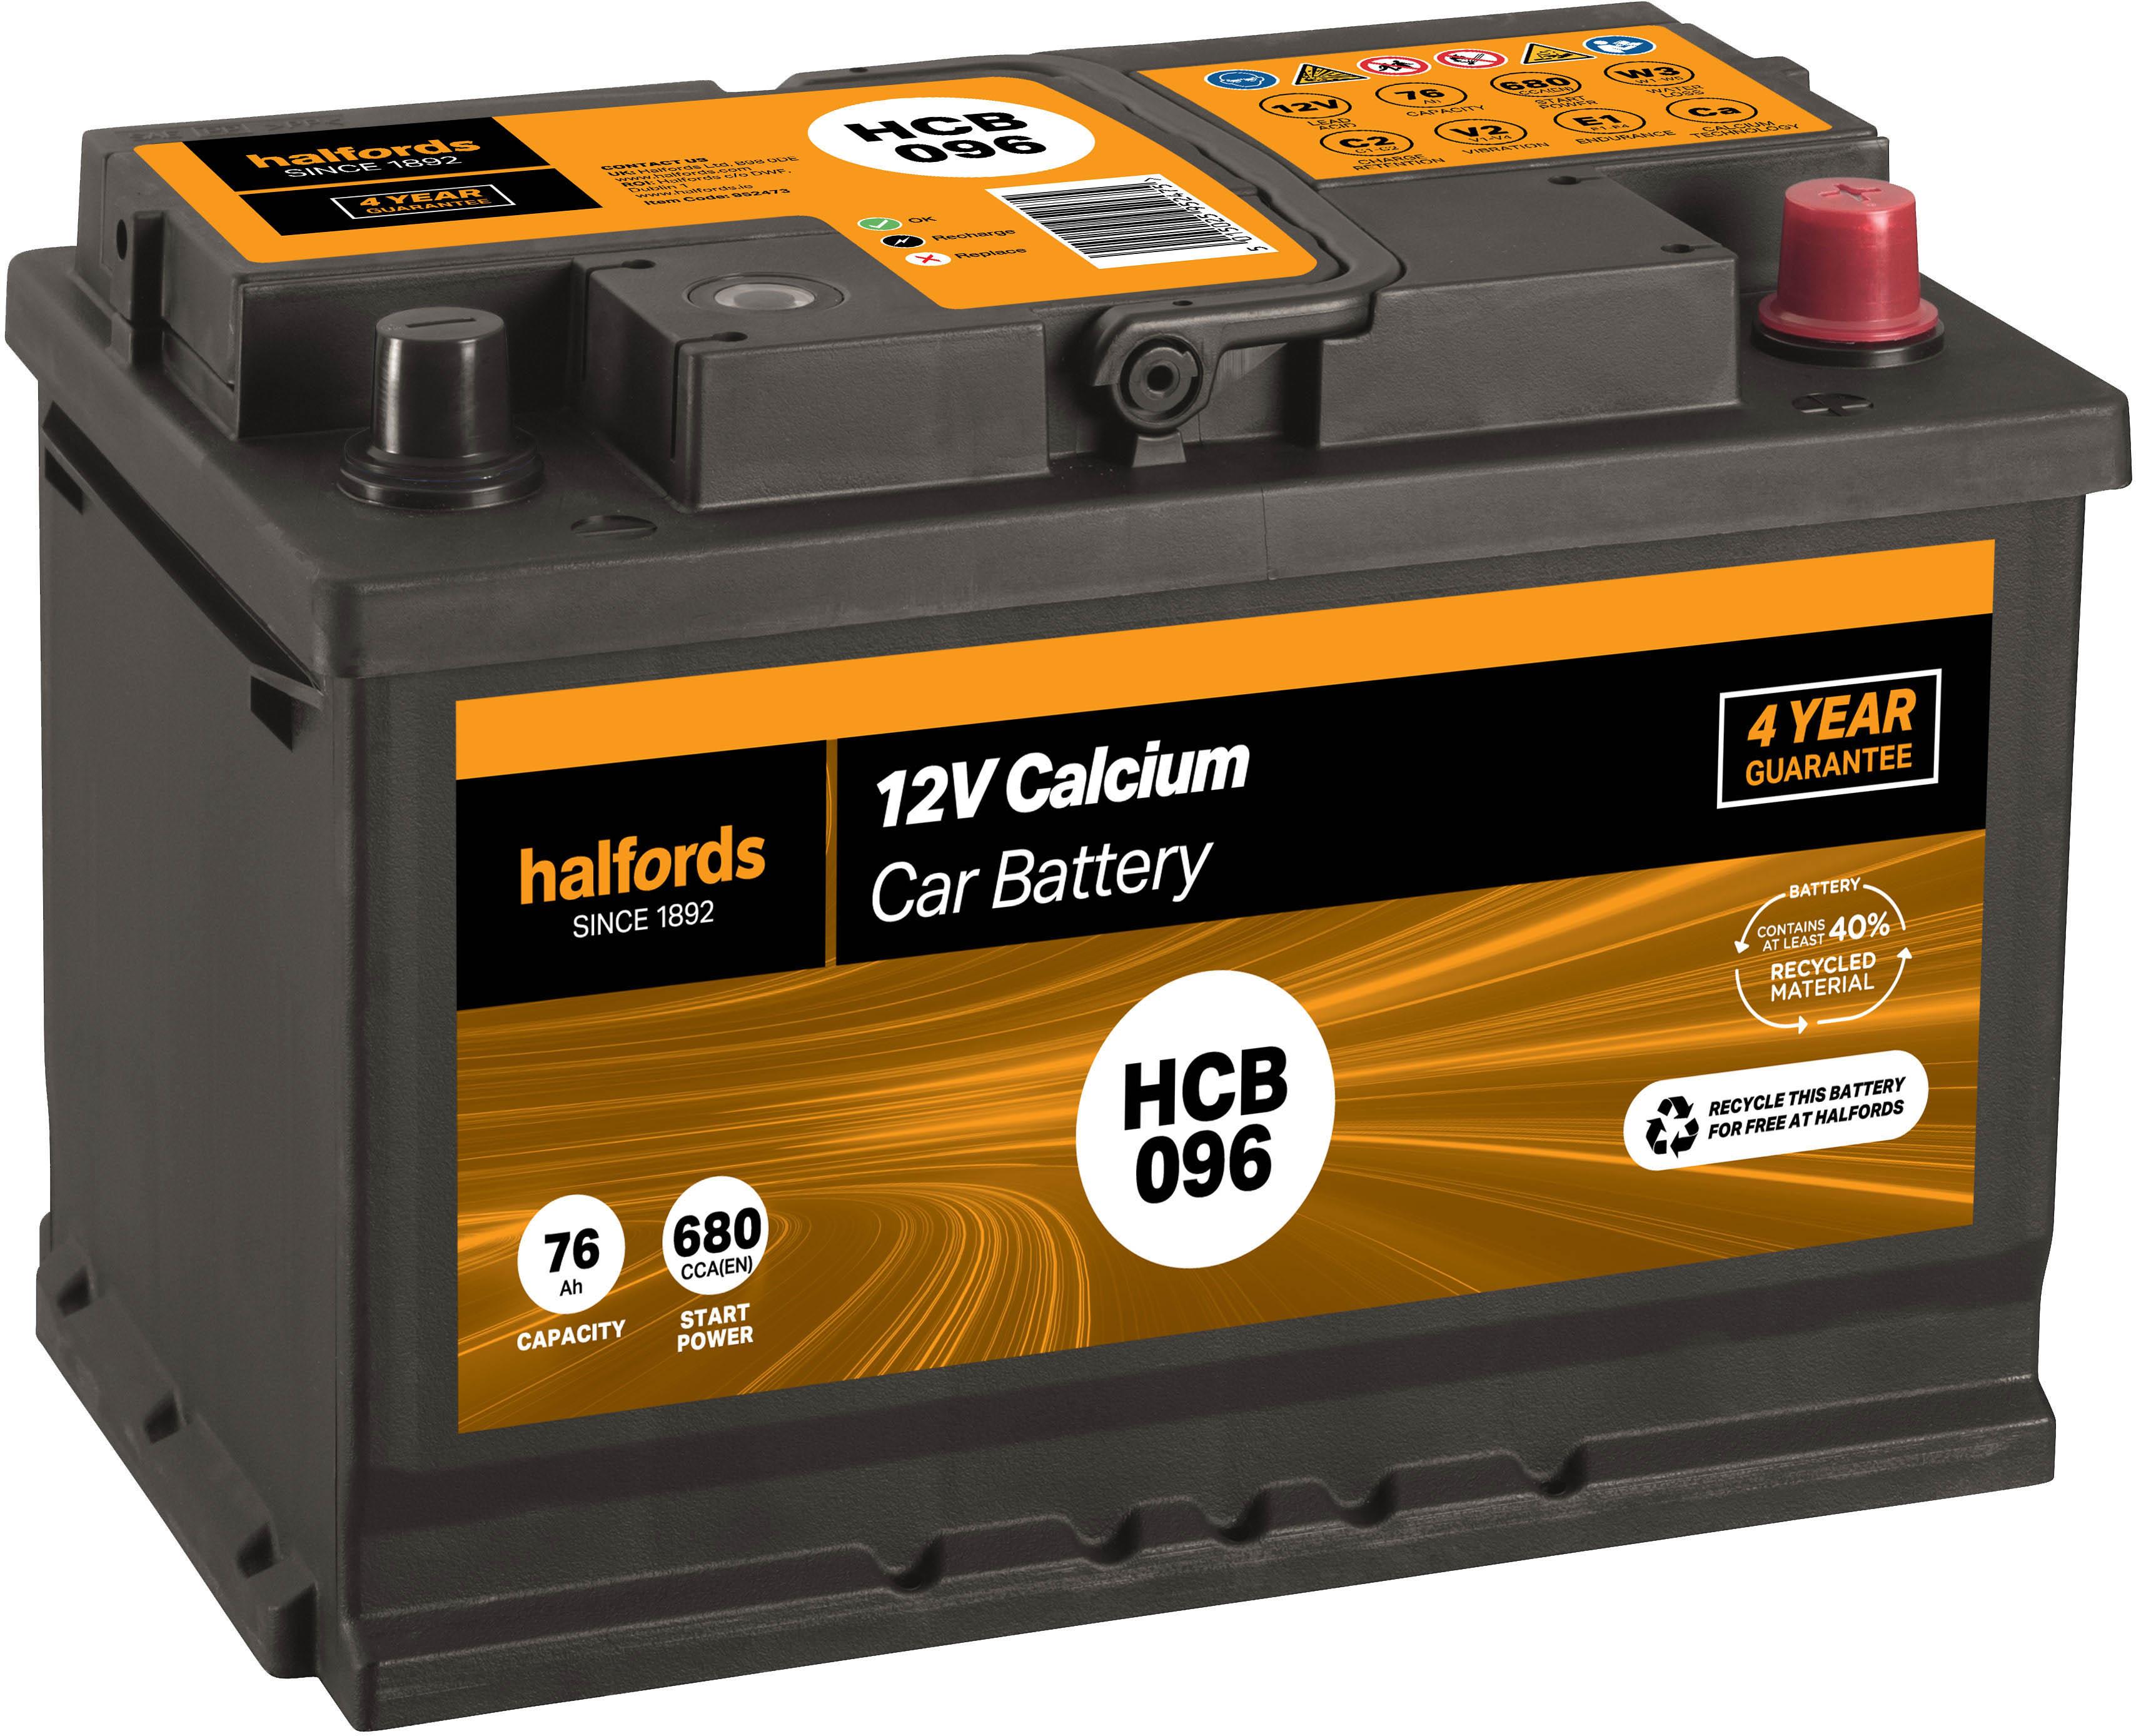 Halfords Hcb096 Calcium 12V Car Battery 4 Year Guarantee